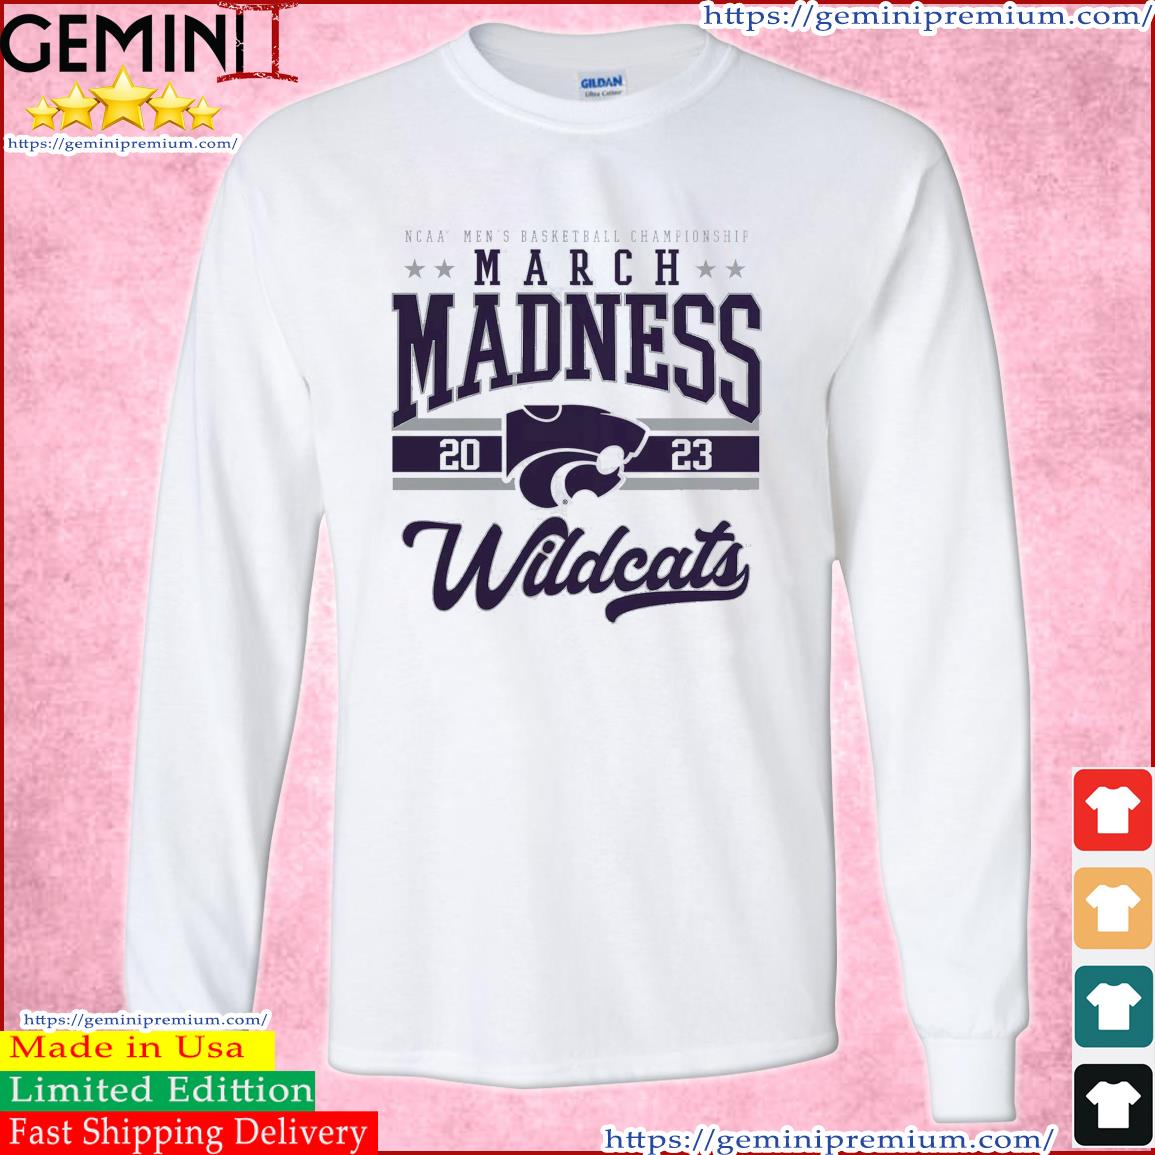 K-State Wildcats NCAA Men's Basketball Tournament March Madness 2023 Shirt Long Sleeve Tee